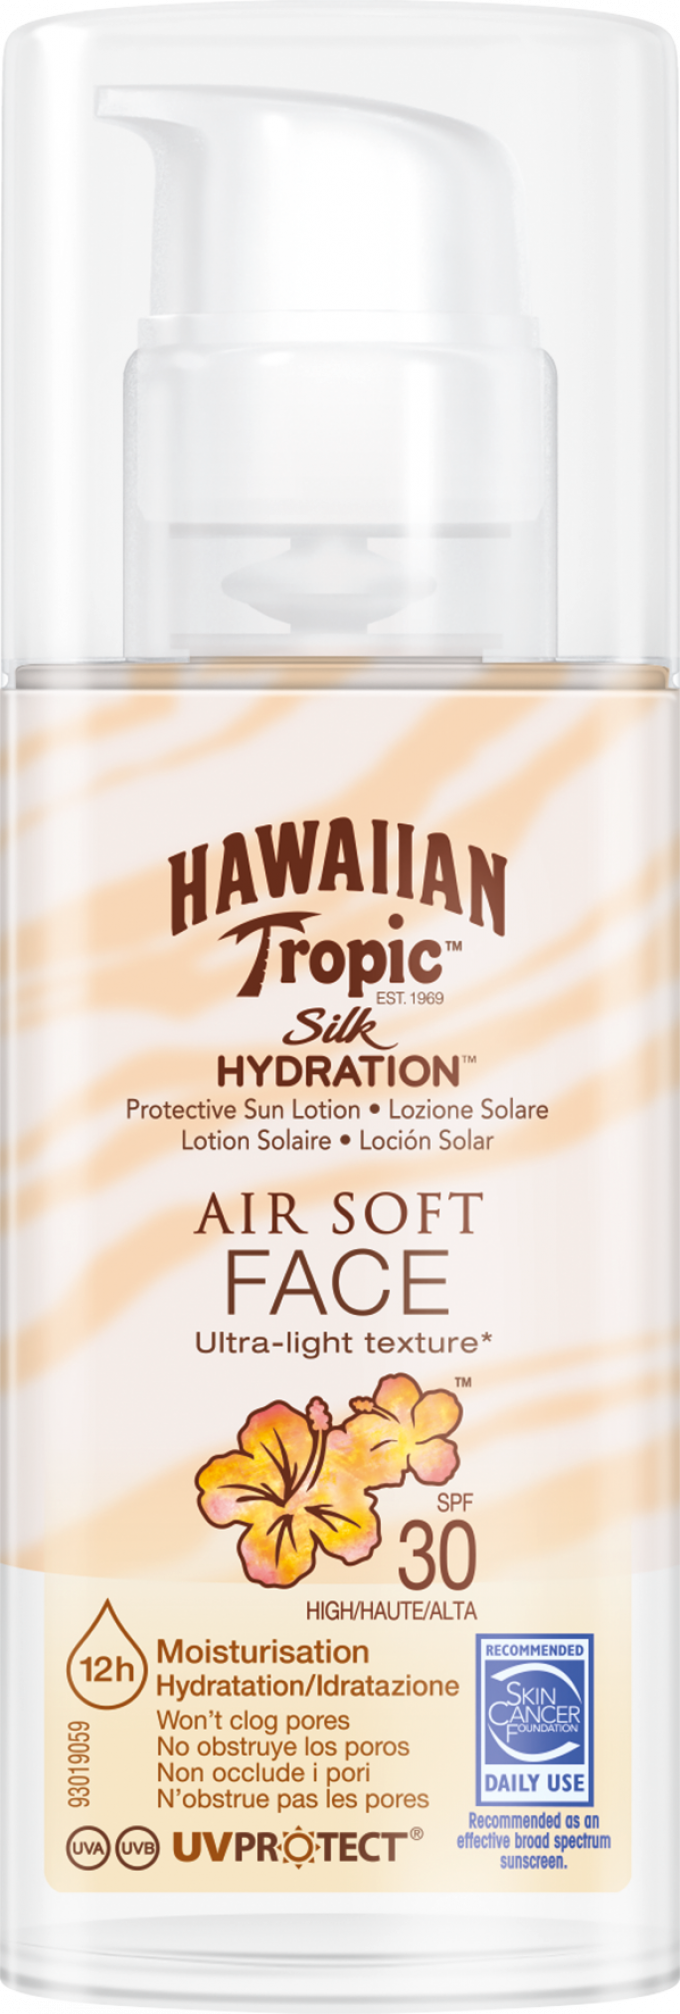 Silk Hydration Air Soft Face